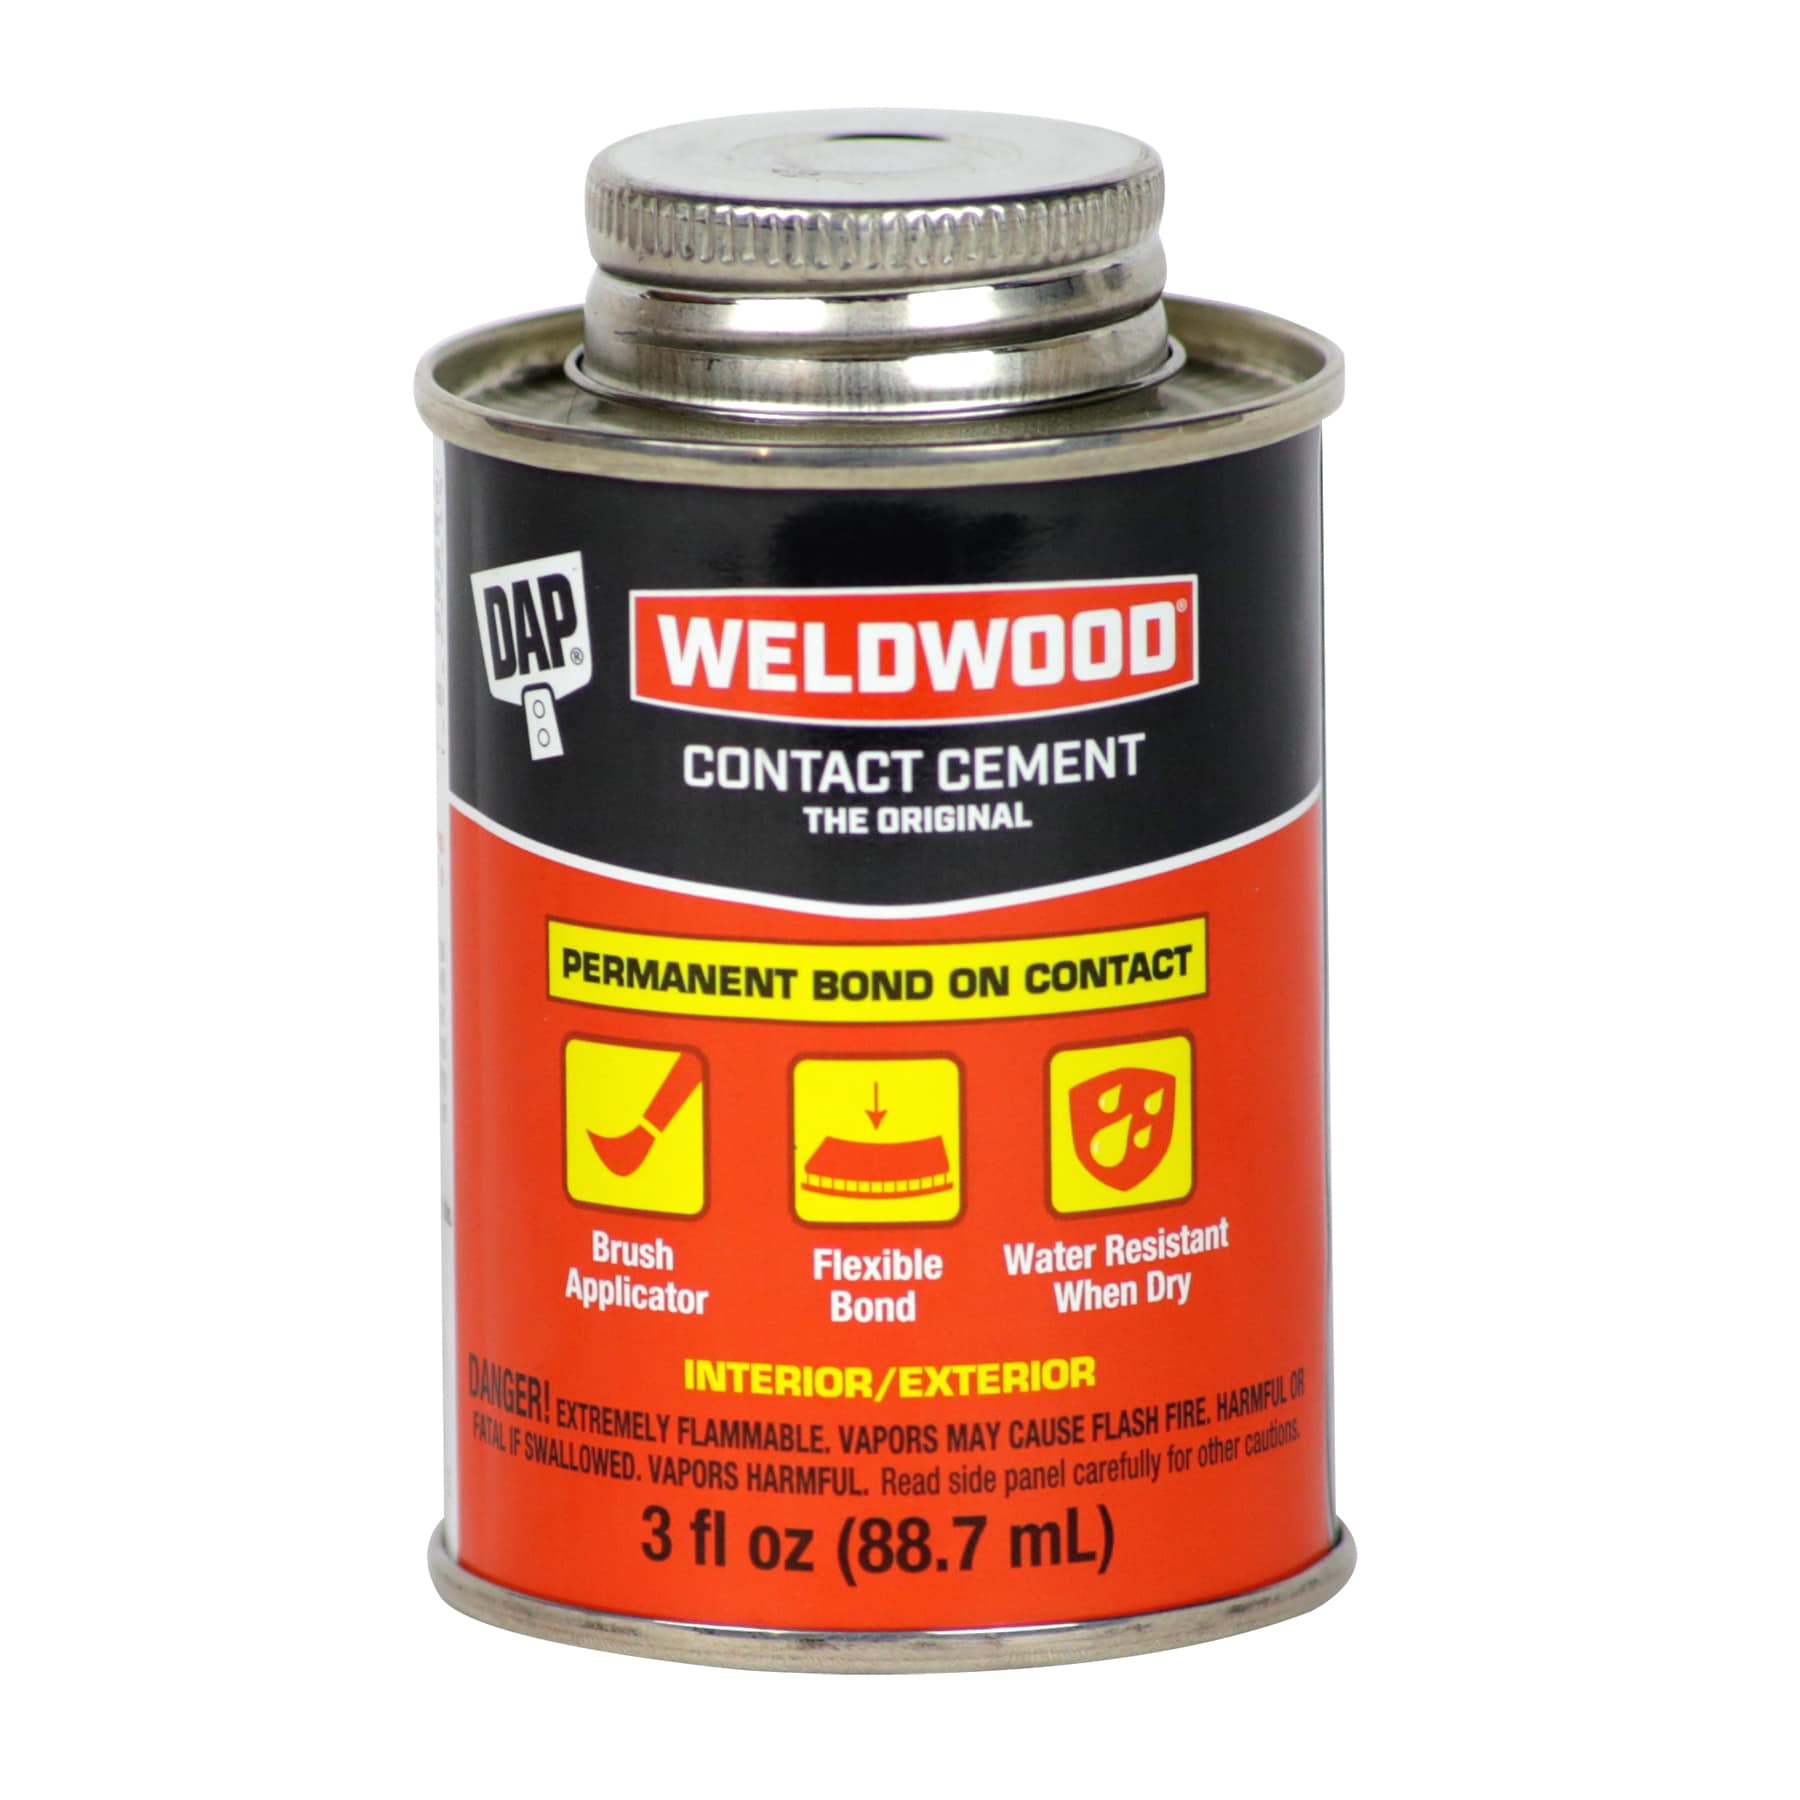 DAP Weldwood 128-fl oz Liquid Contact Cement Waterproof, Quick Dry,  Multipurpose Adhesive in the Multipurpose Adhesive department at